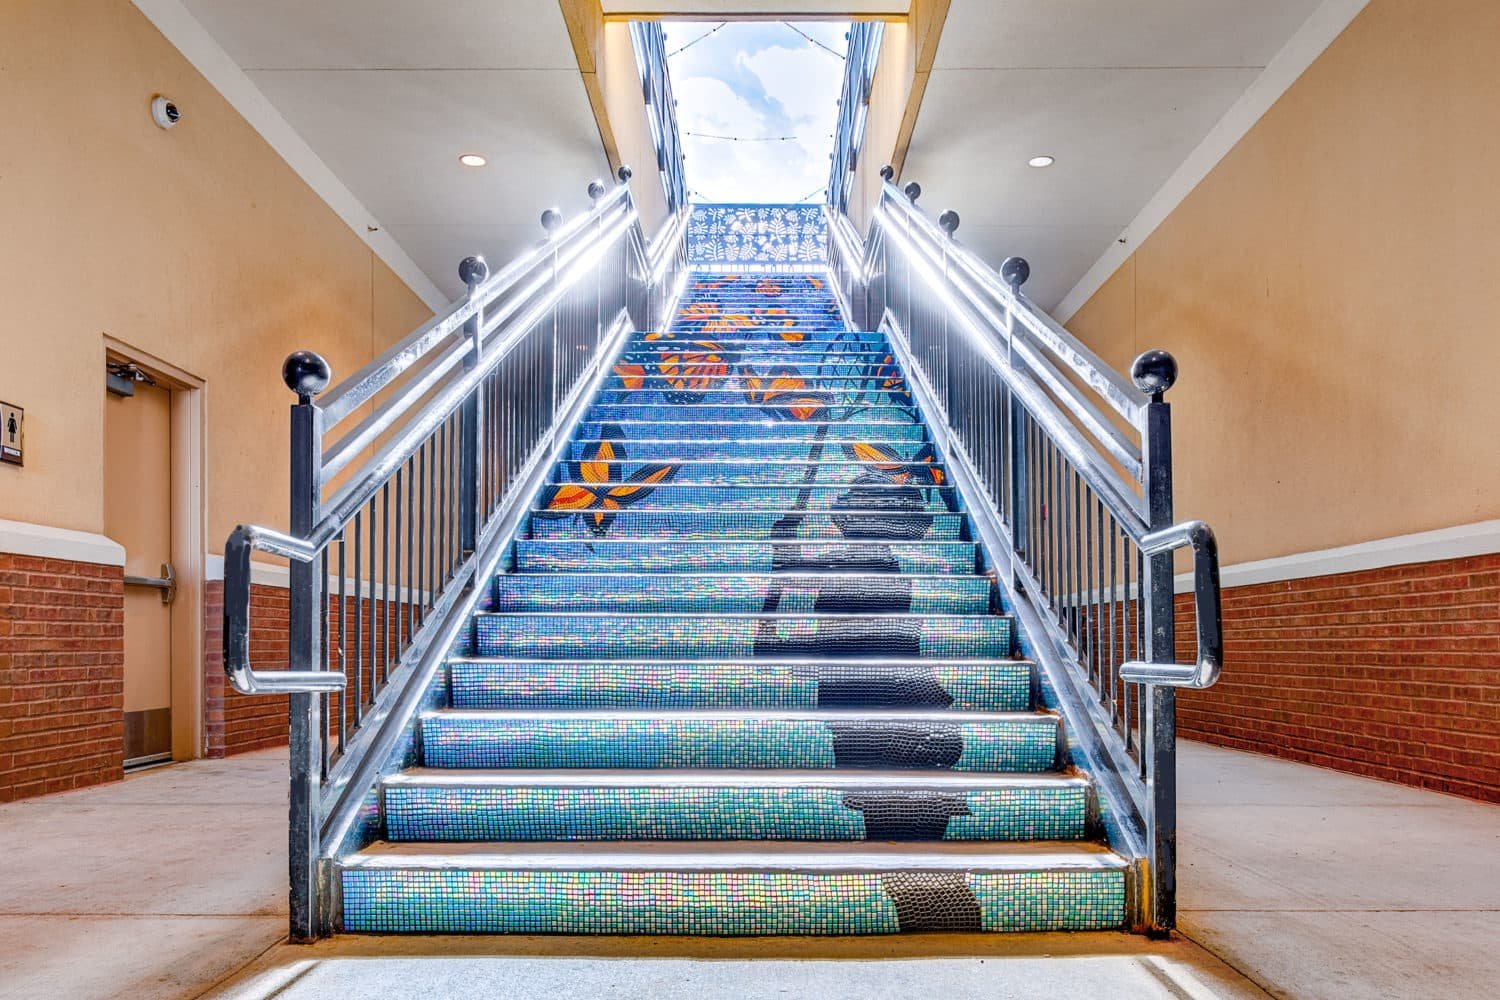 См лестниц. Цветная лестница. Мозаика на лестнице. Оформление лестницы. Мозаика на лестнице в частном доме.